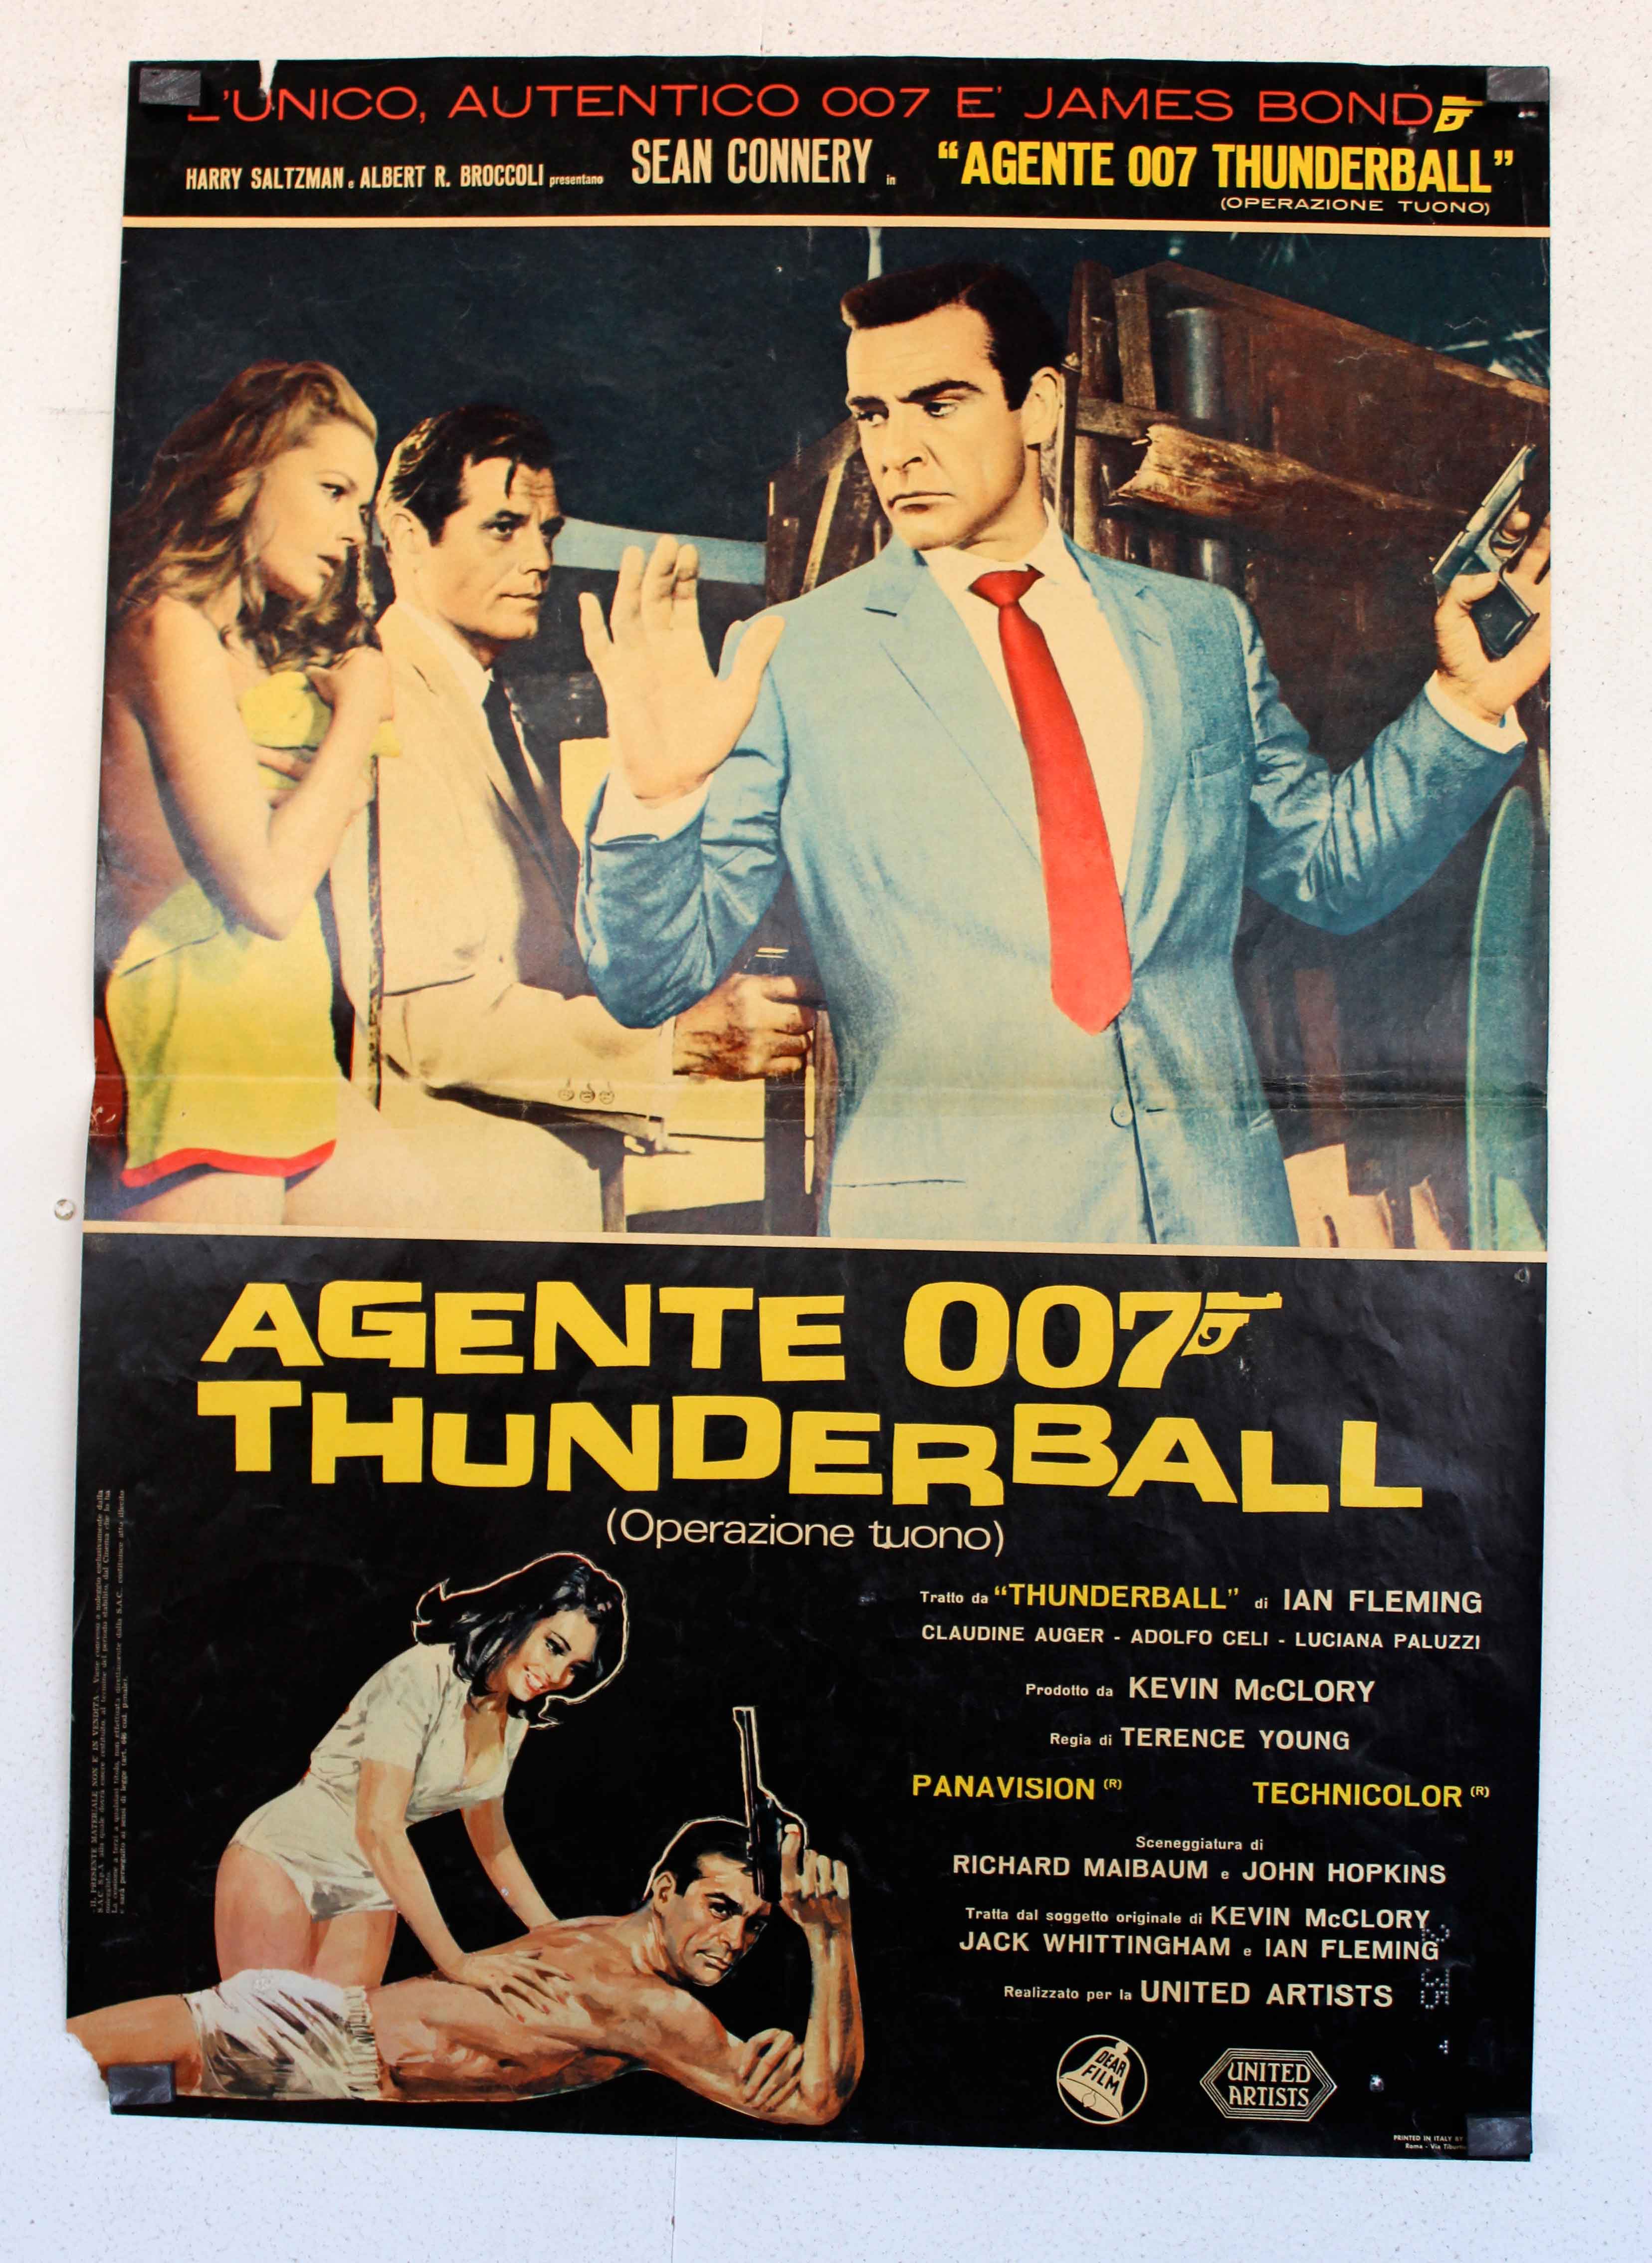 AGENTE 007 THUNDERBALL MOVIE POSTER - THUNDERBALL MOVIE POSTER